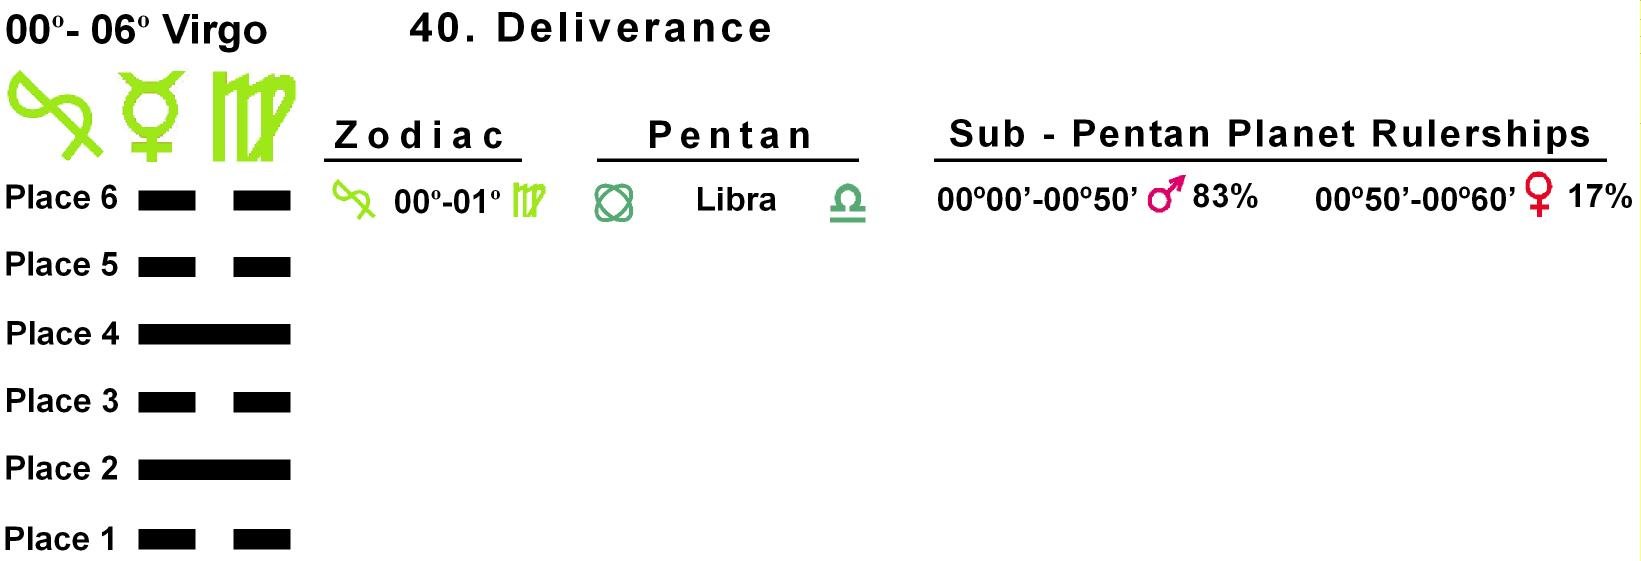 Pent-lines-06VI 00-01 Hx-40 Deliverance